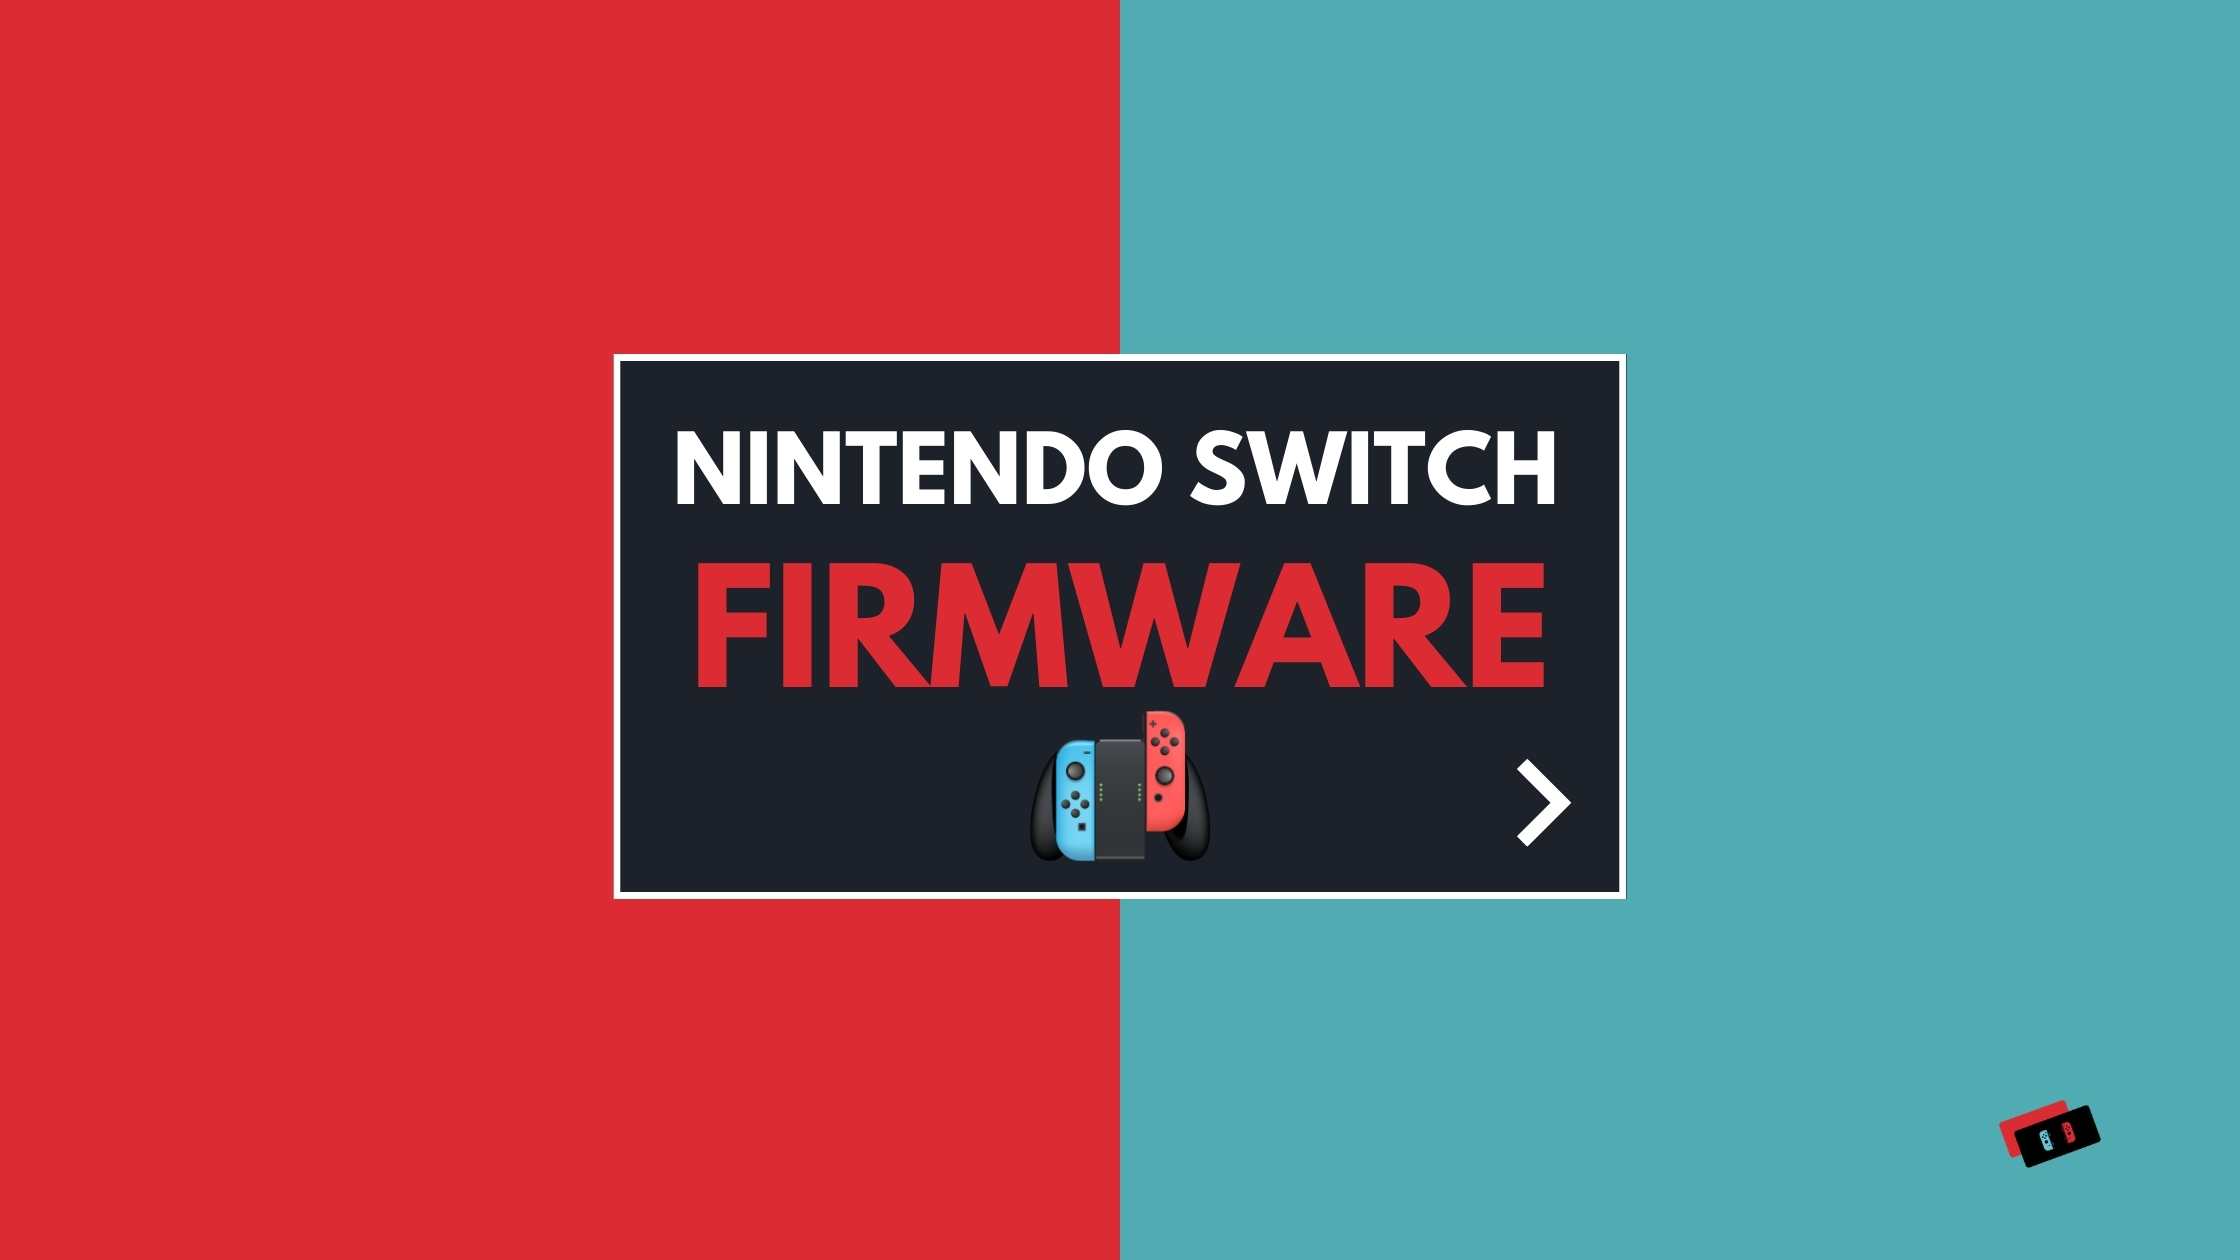 Popular Nintendo Switch emulator yuzu now supports Android